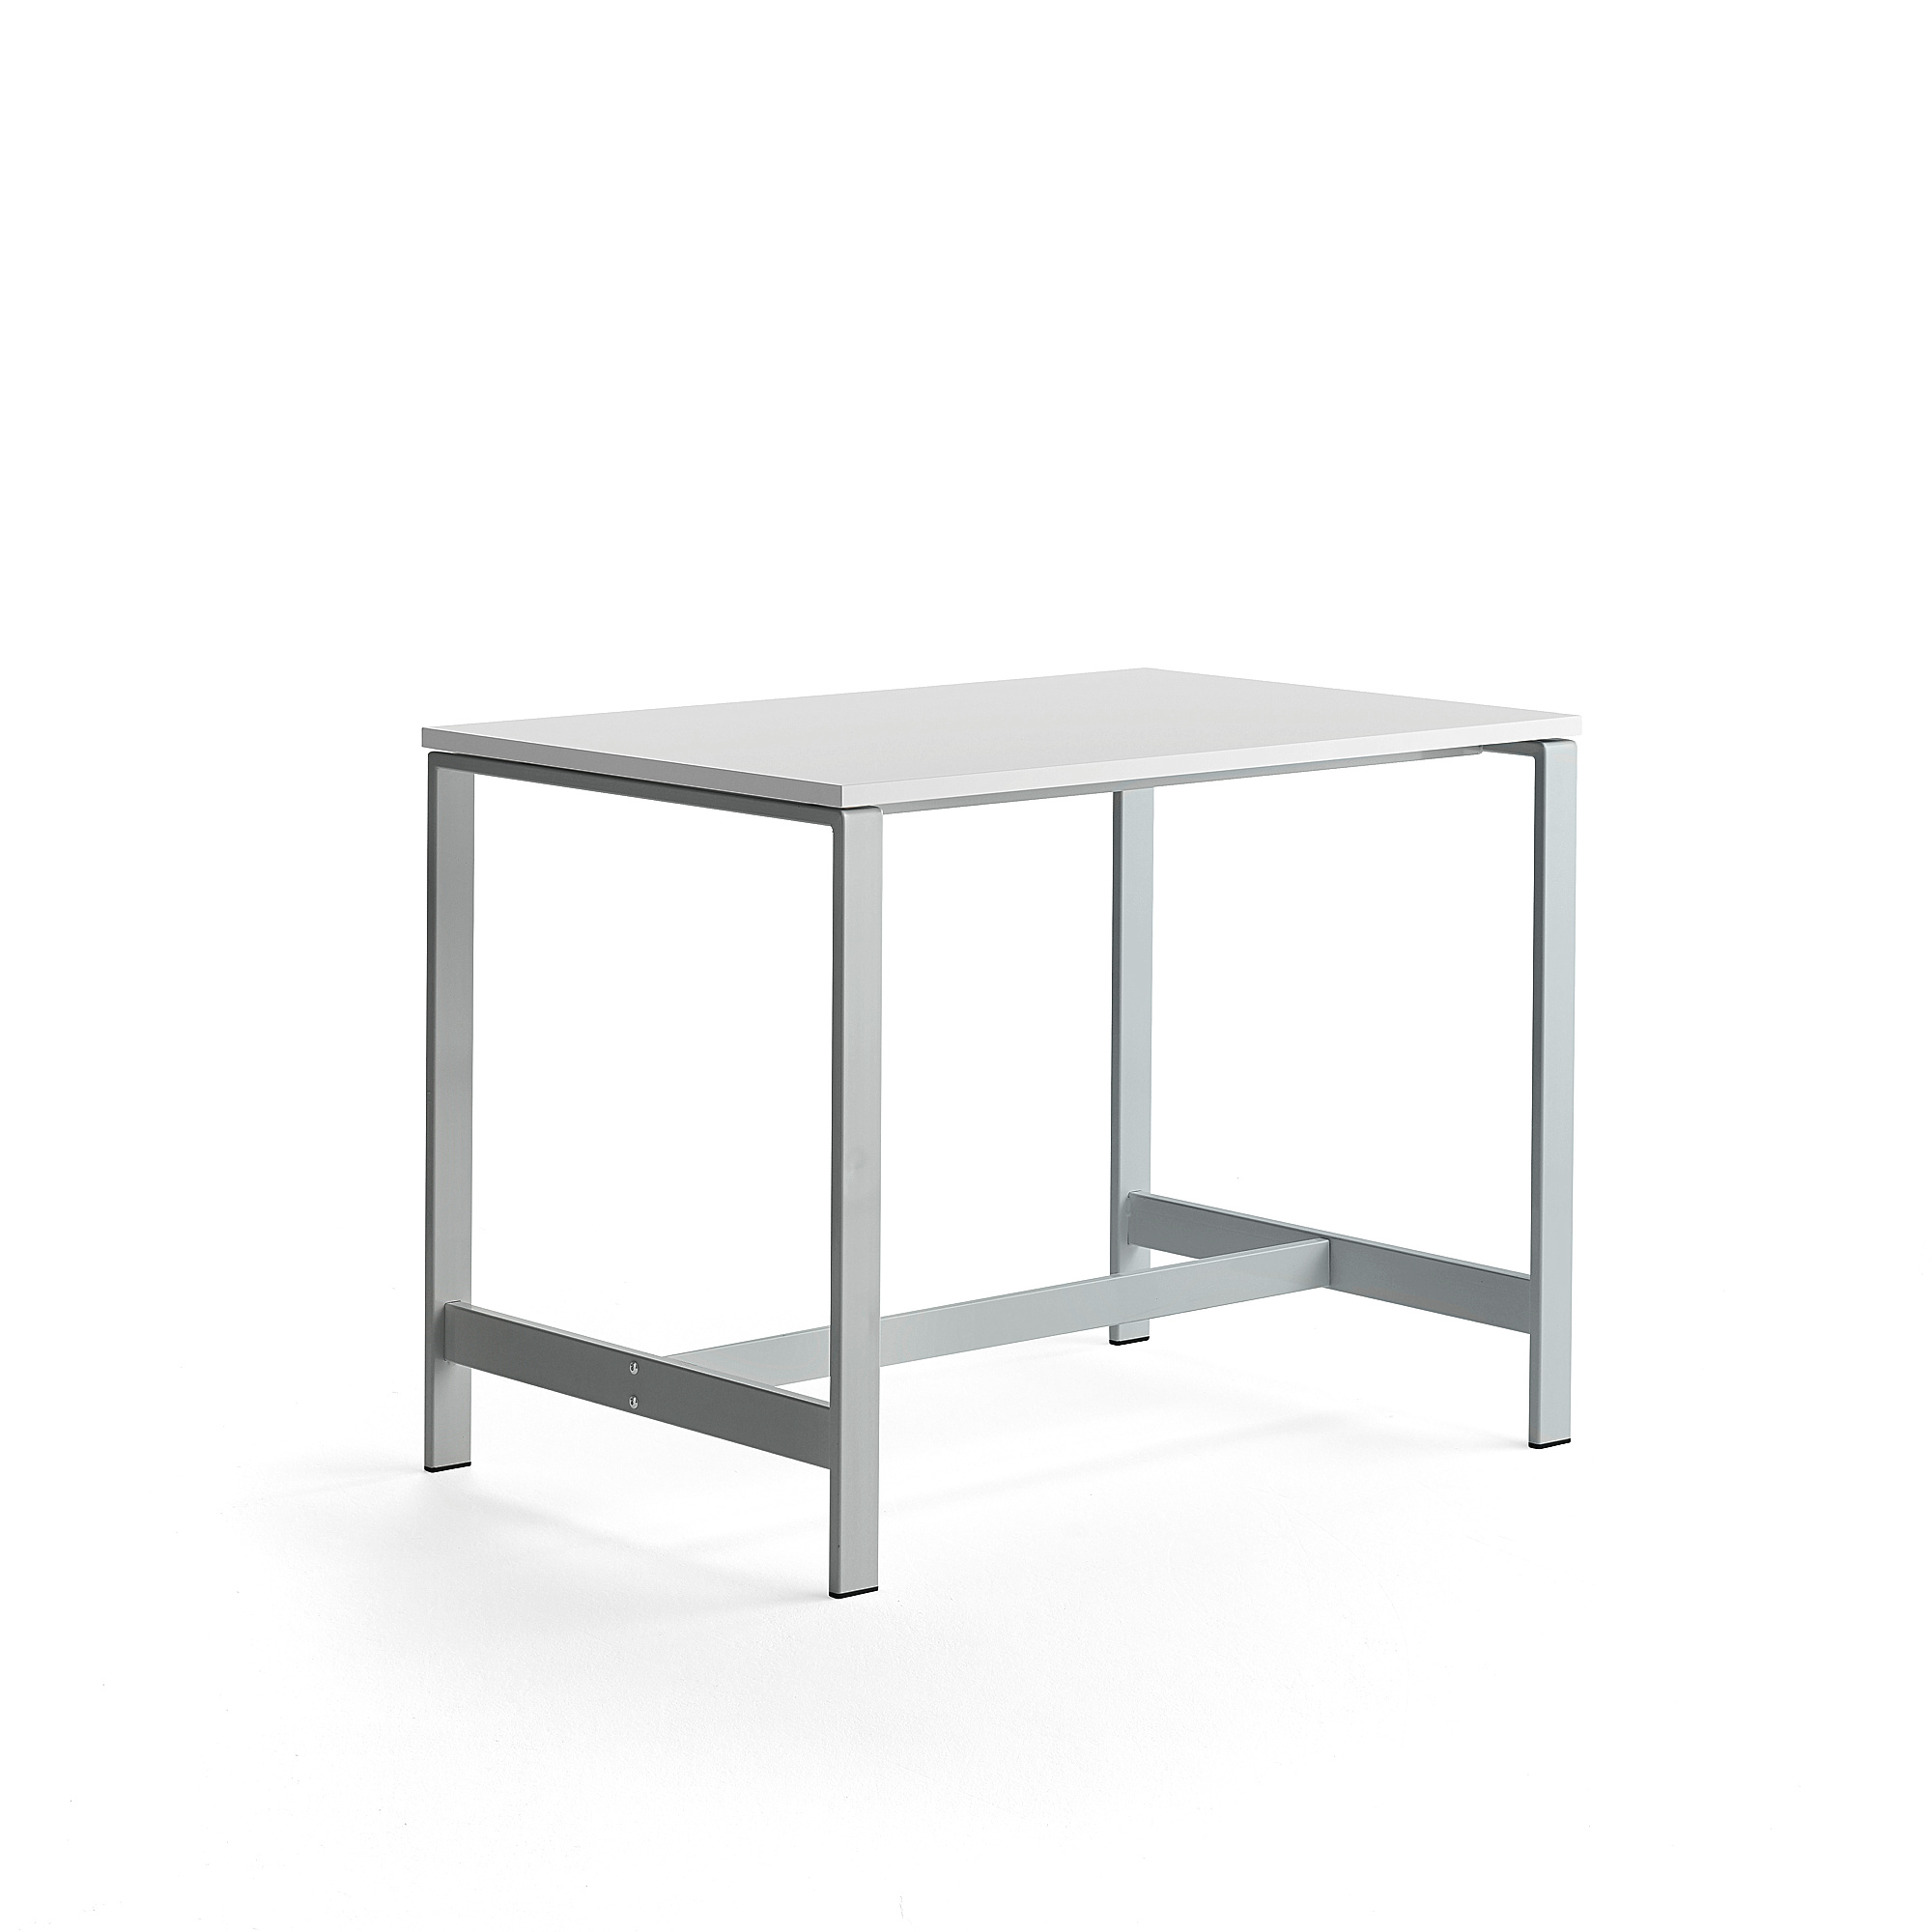 Stůl VARIOUS, 1200x800 mm, výška 900 mm, stříbrné nohy, bílá